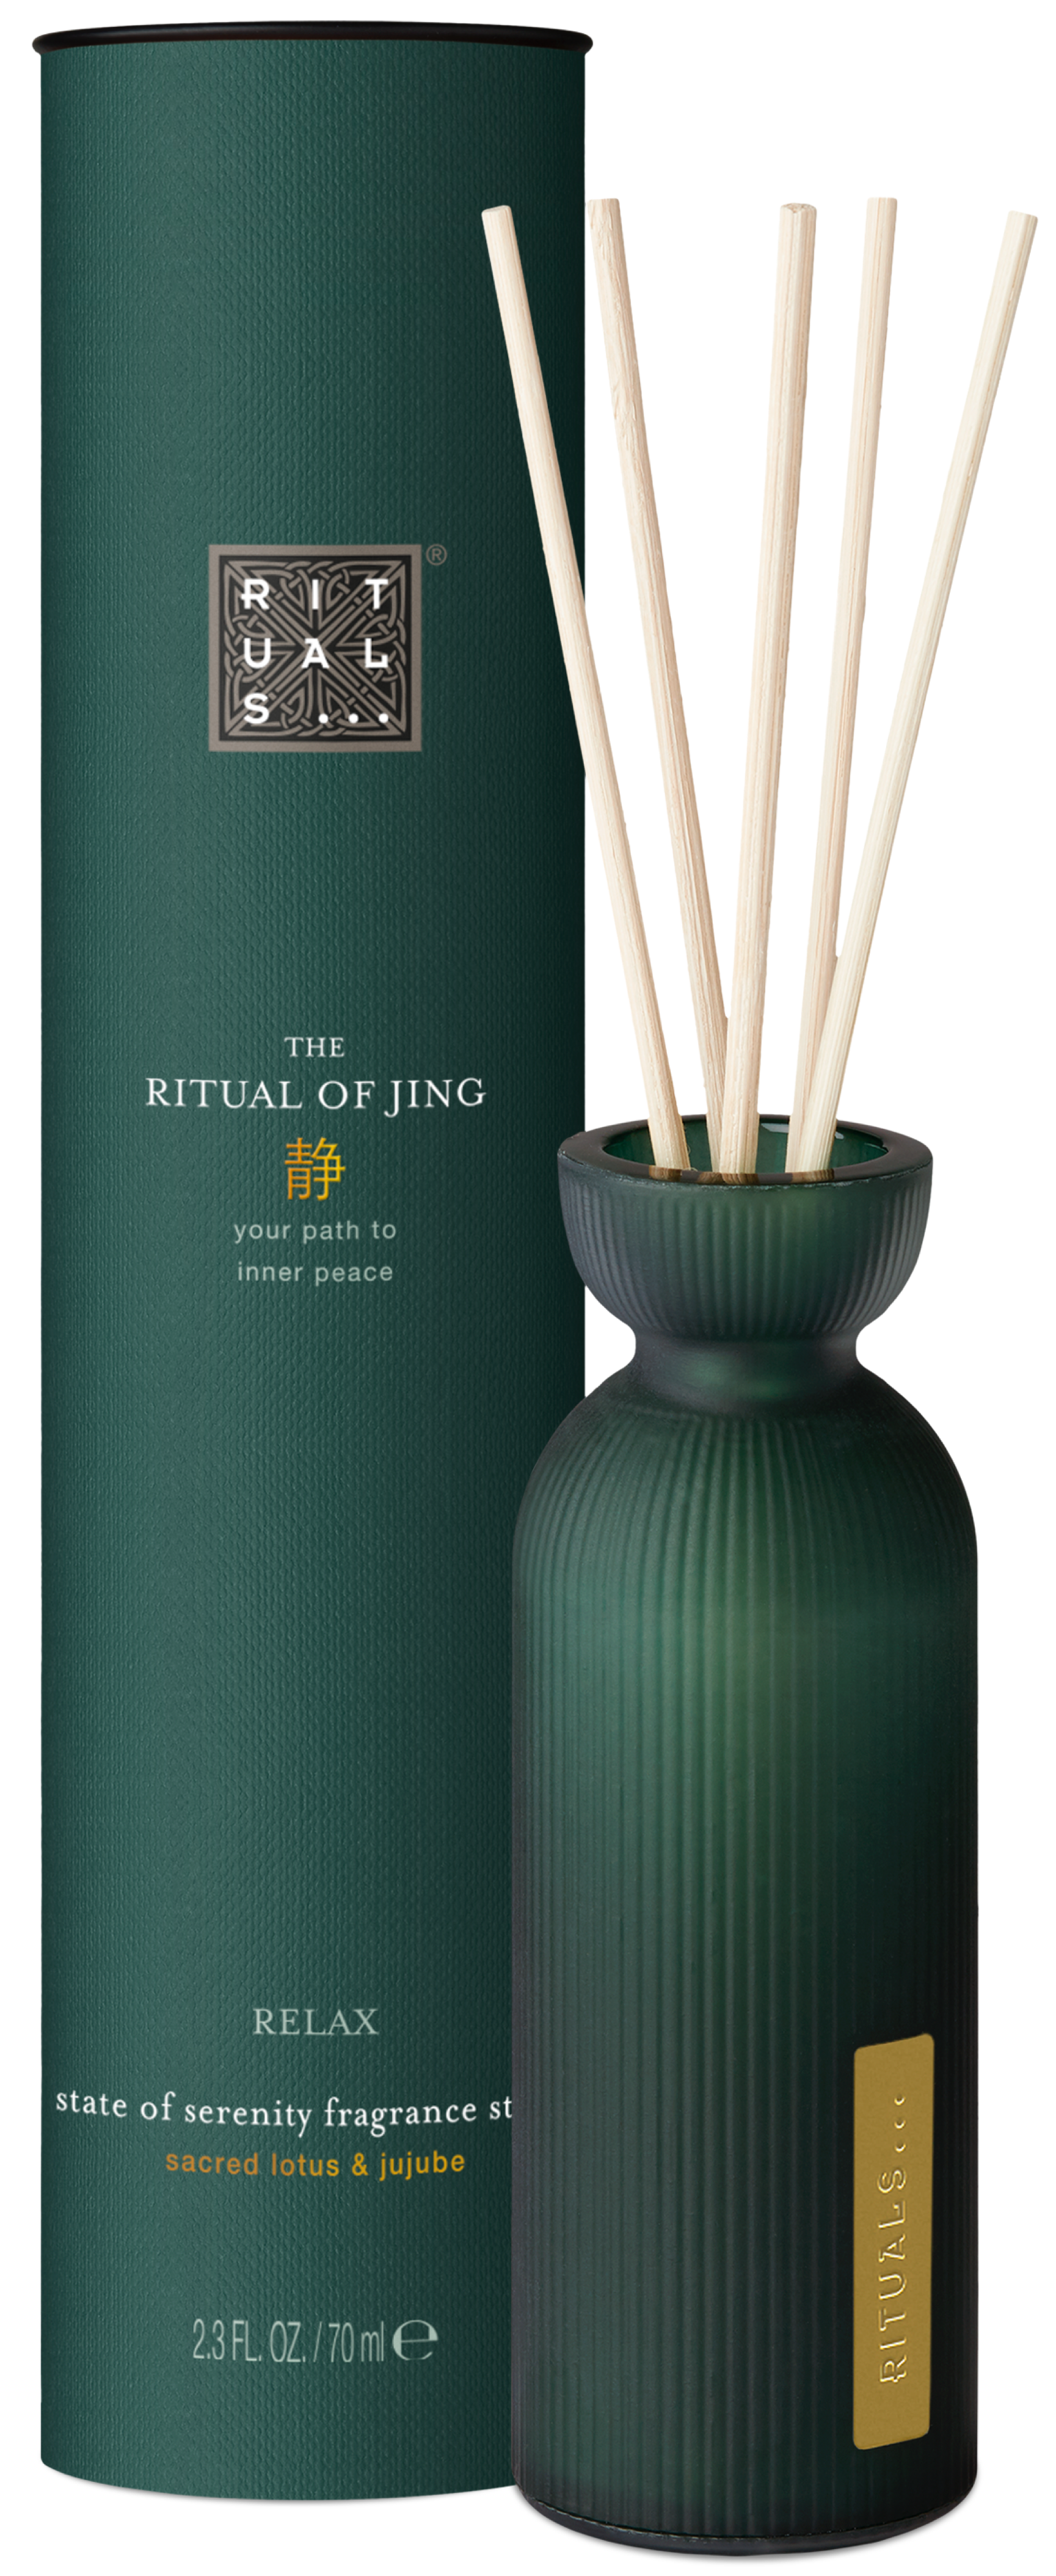 The Ritual of Jing Home Fragrance från Lyko innehåller 70 ml och kostar 175 kr. 